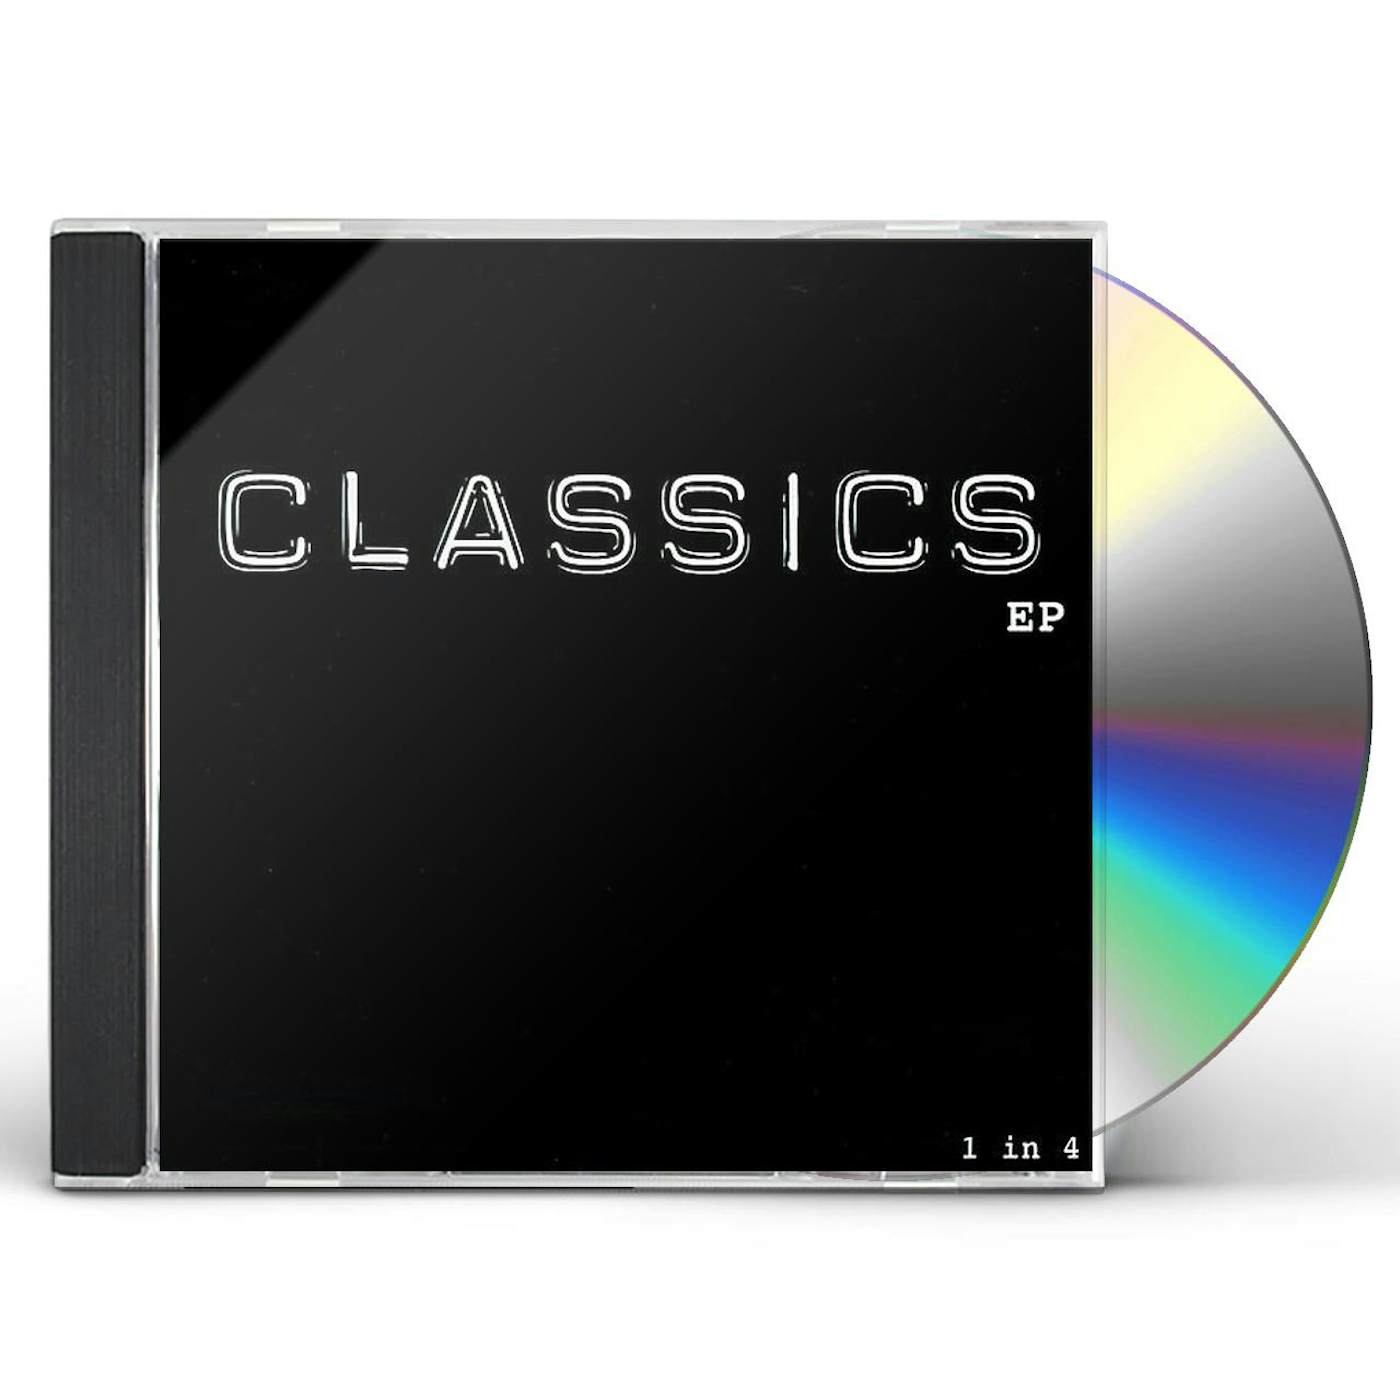 The Classics 1 IN 4 CD